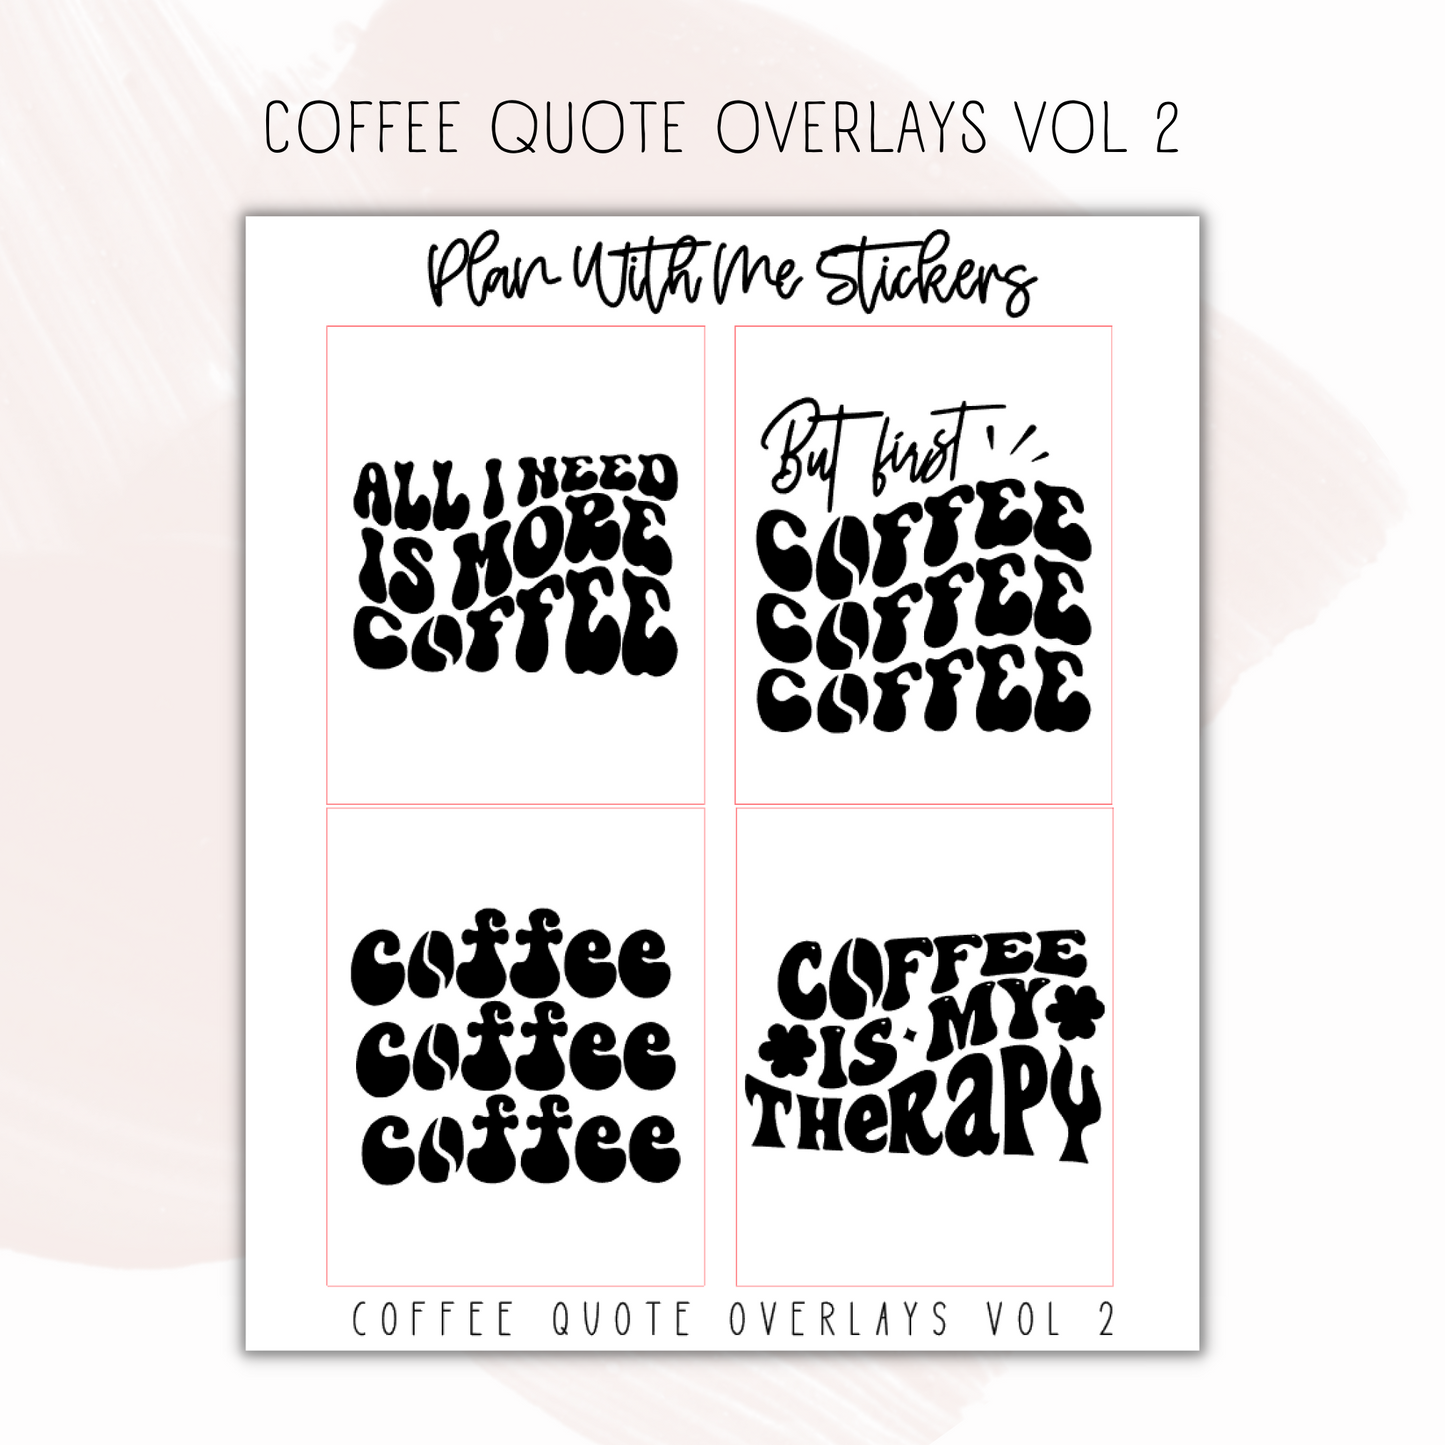 Coffee Quote Overlays Vol 2